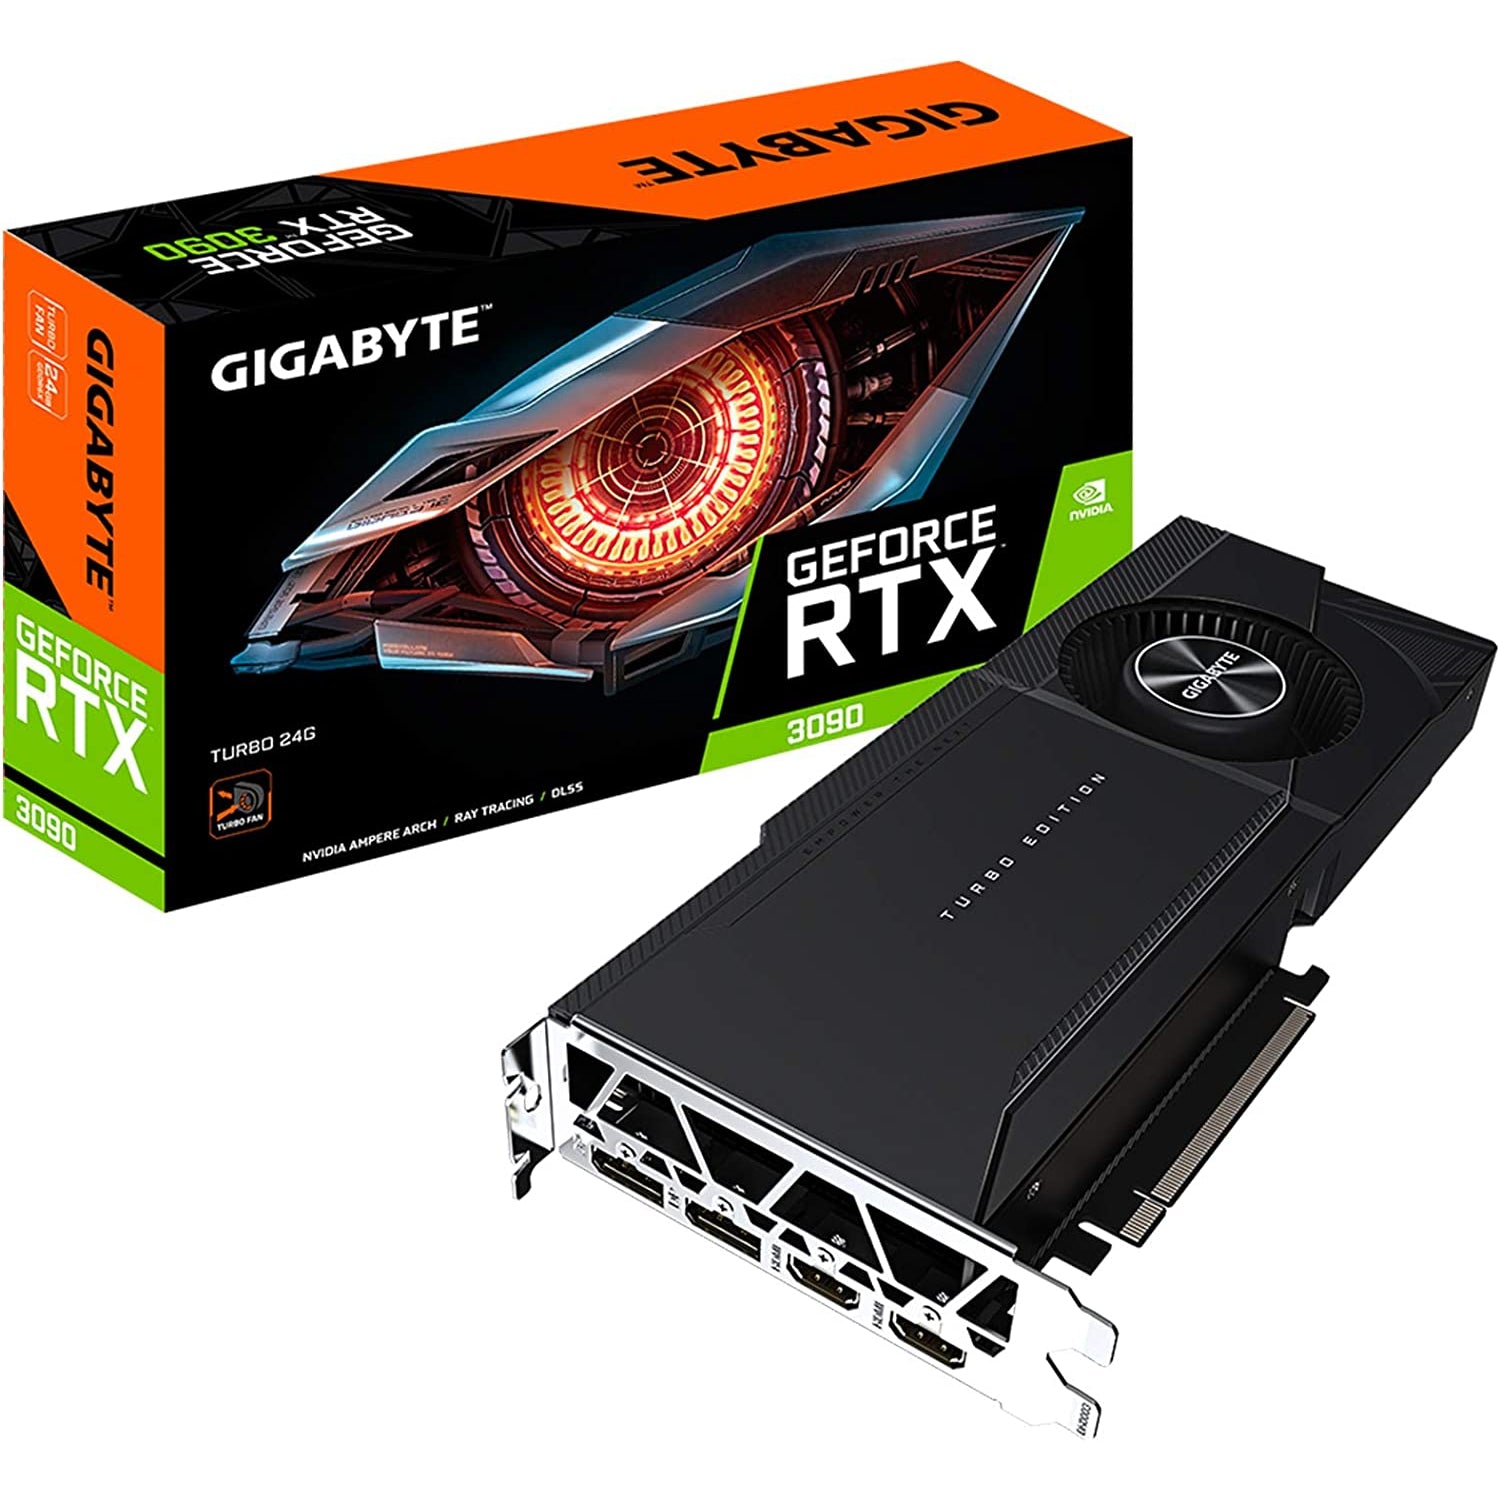 Gigabyte GeForce RTX 3090 TURBO 24GB Graphics Card